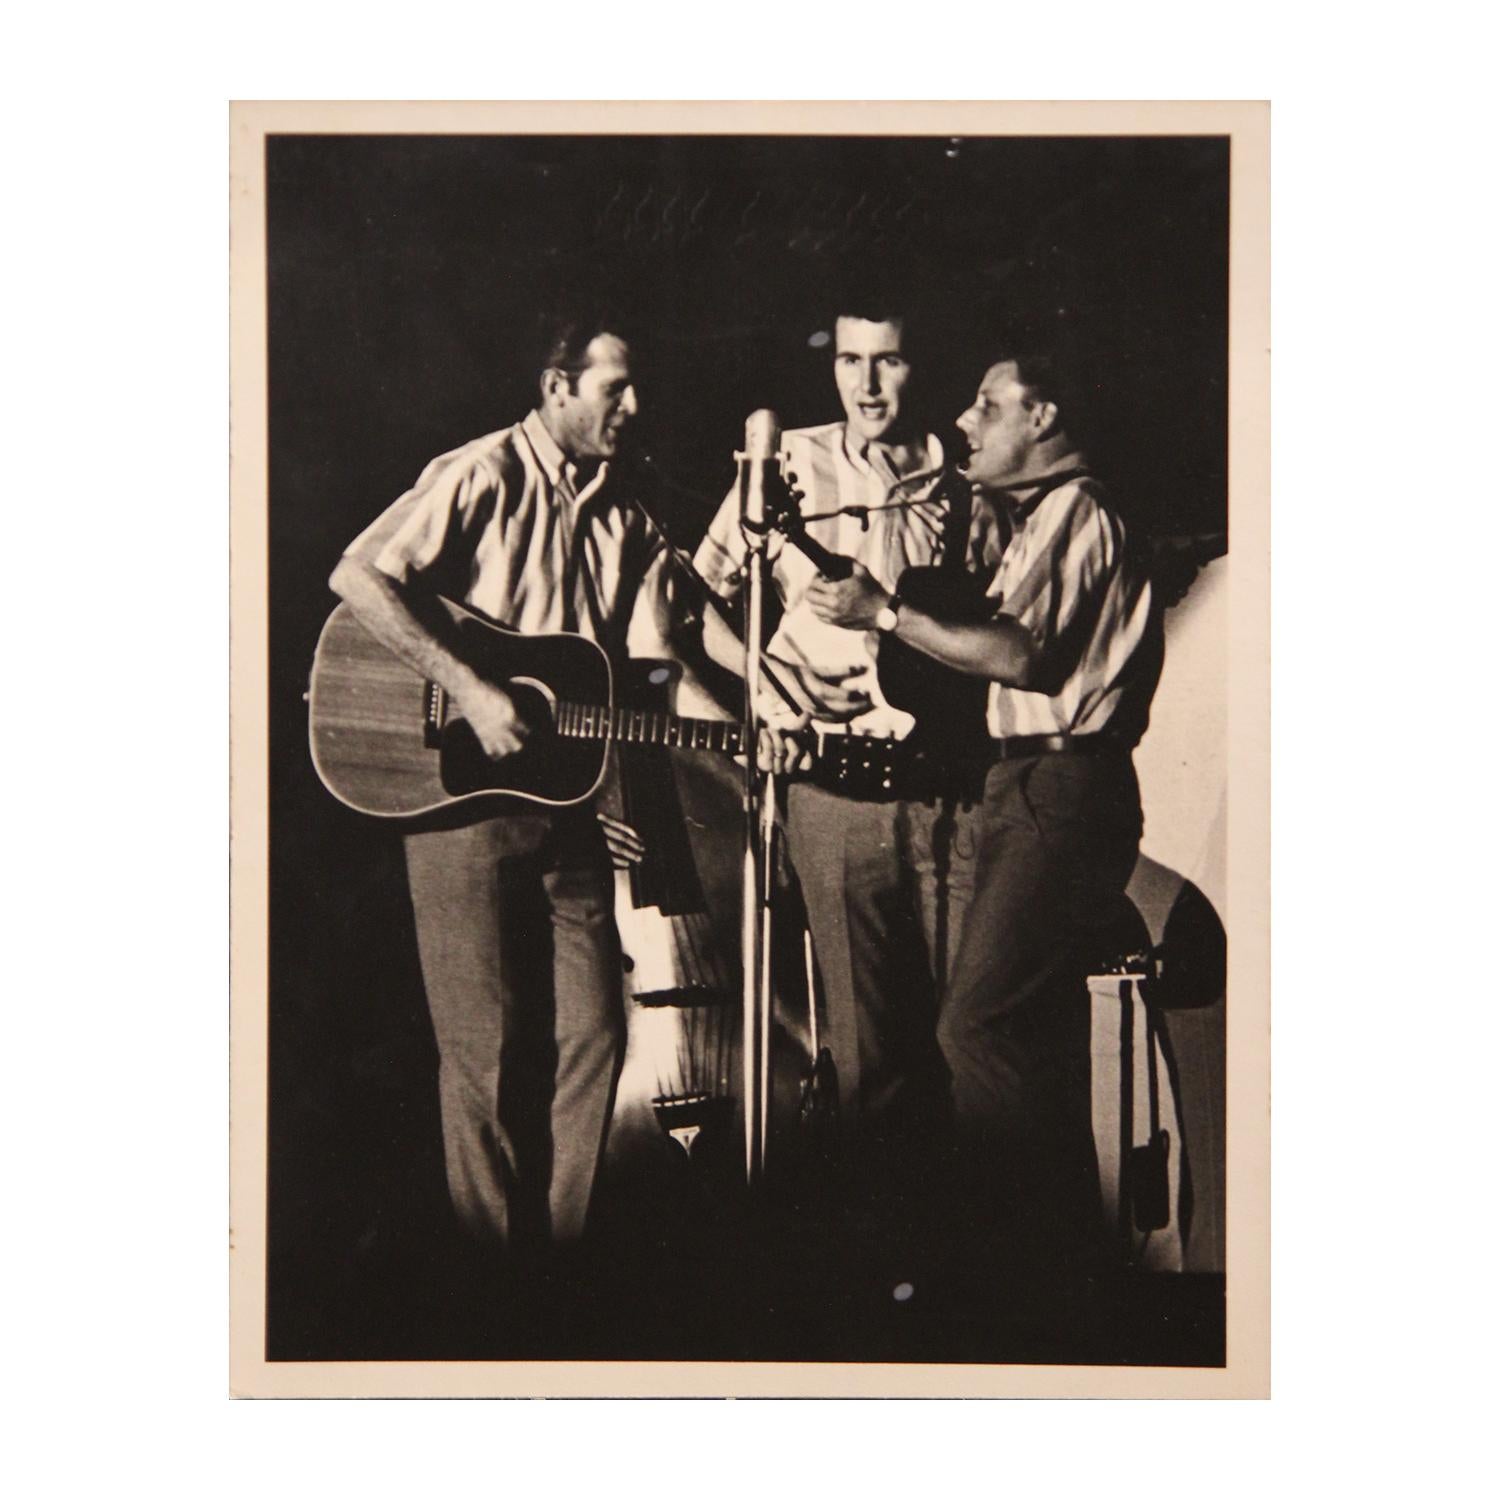 Unknown Portrait Photograph - "Kingston Trio" Iconic American Folk Music Photograph